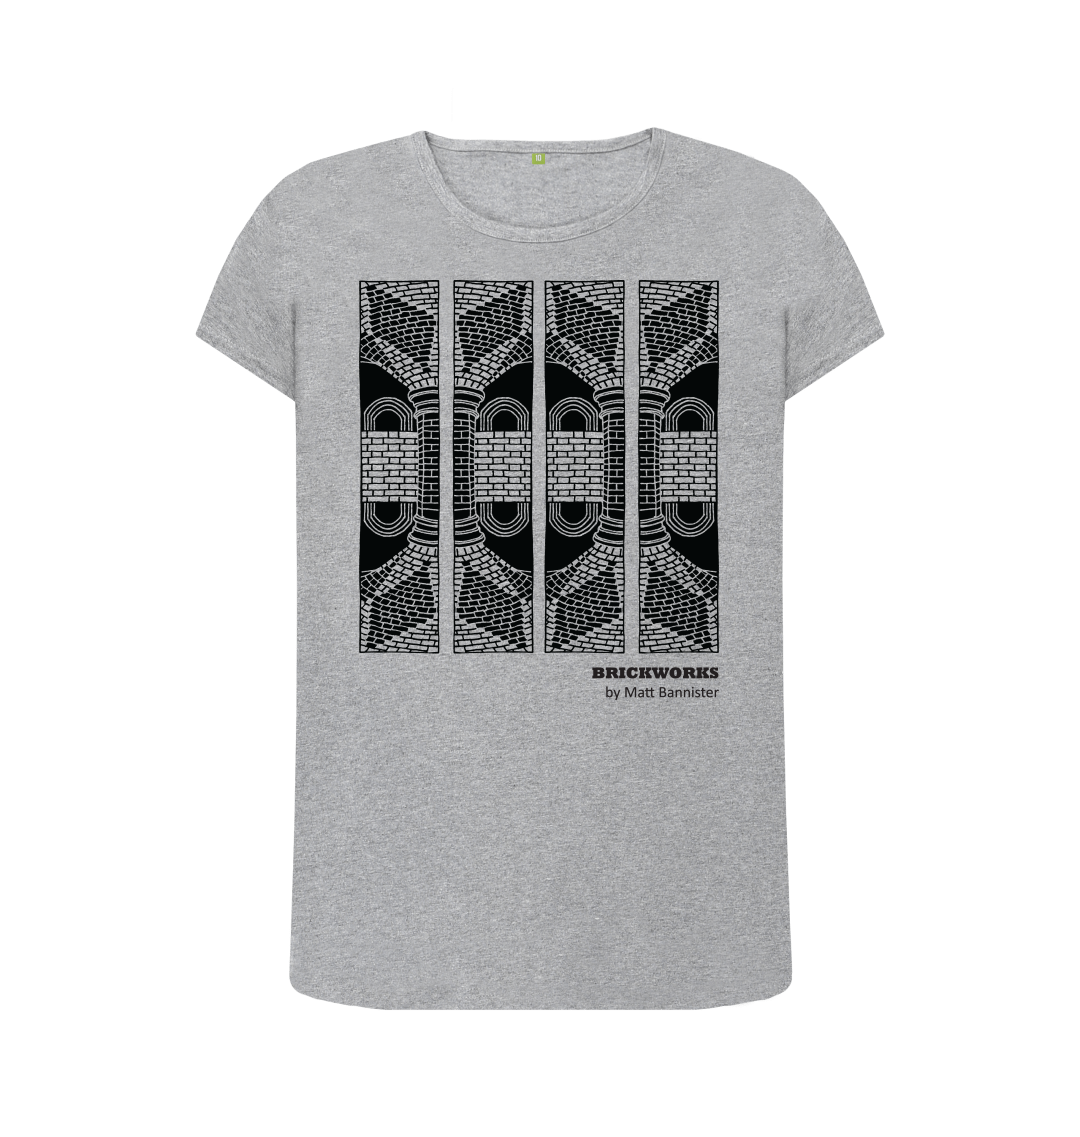 Crystal Palace Brickwork crew t-shirt (black design) GREY.png